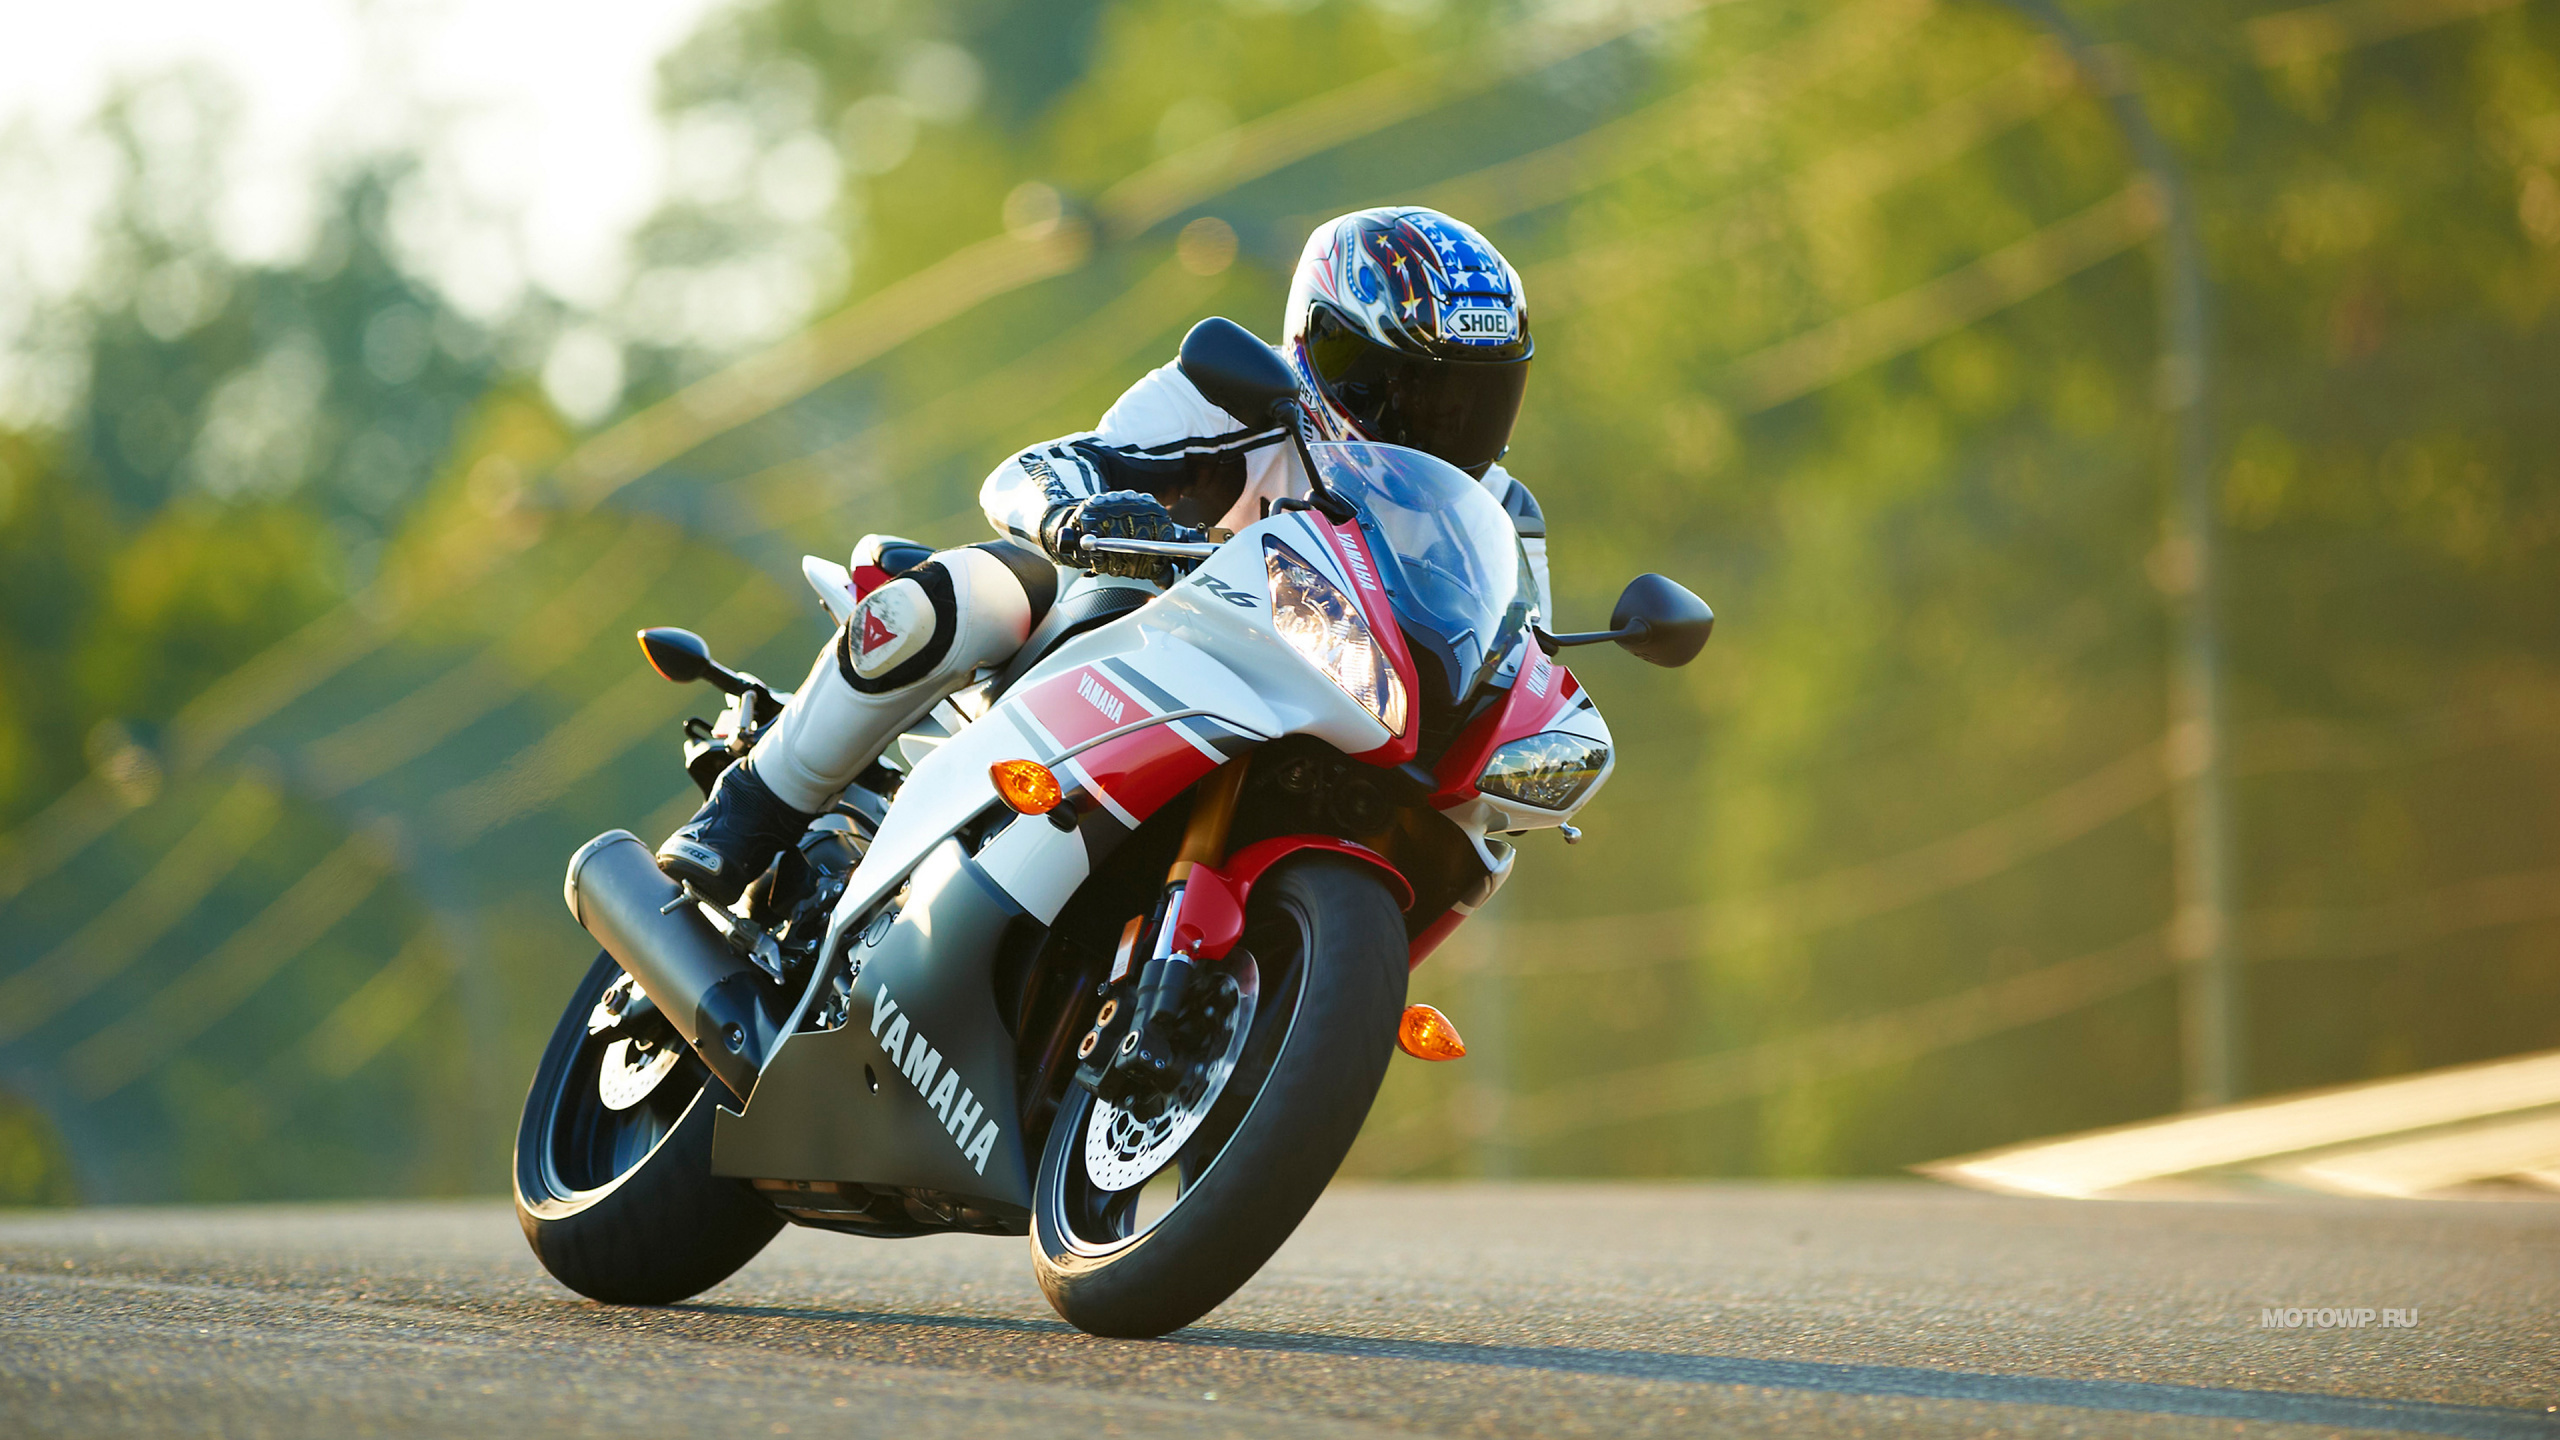 Homme en Costume de Moto Rouge et Blanc à Moto. Wallpaper in 2560x1440 Resolution